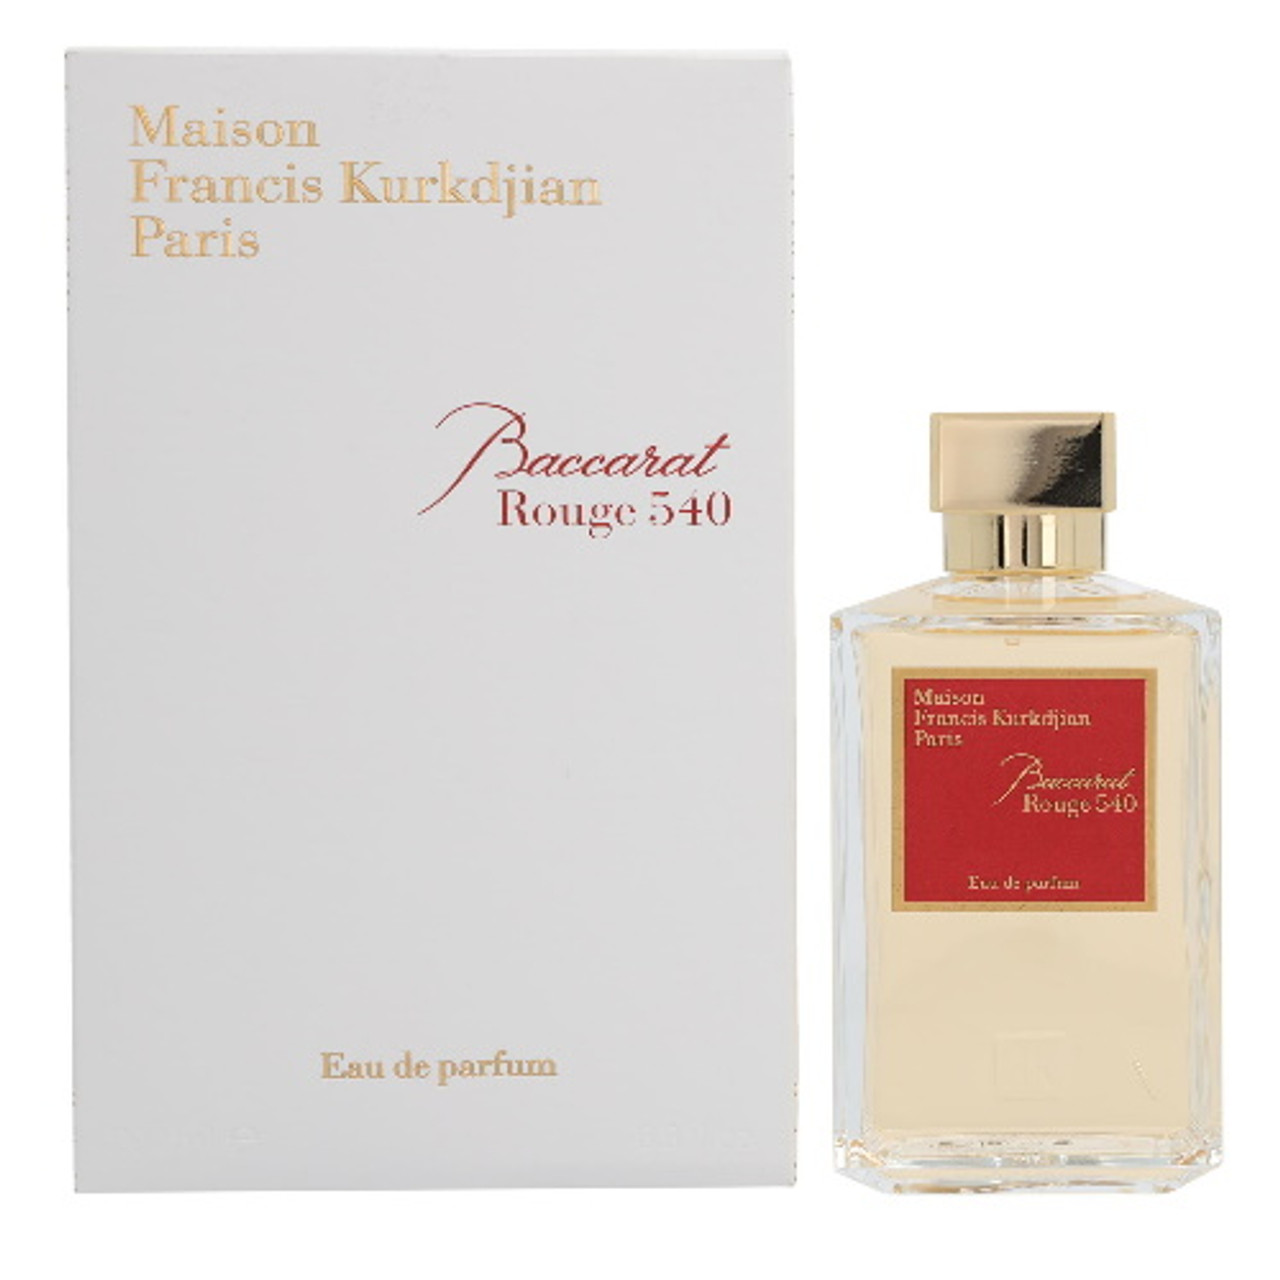 Maison Francis Kurkdjian Perfume and 5 Fragrances To Gift For